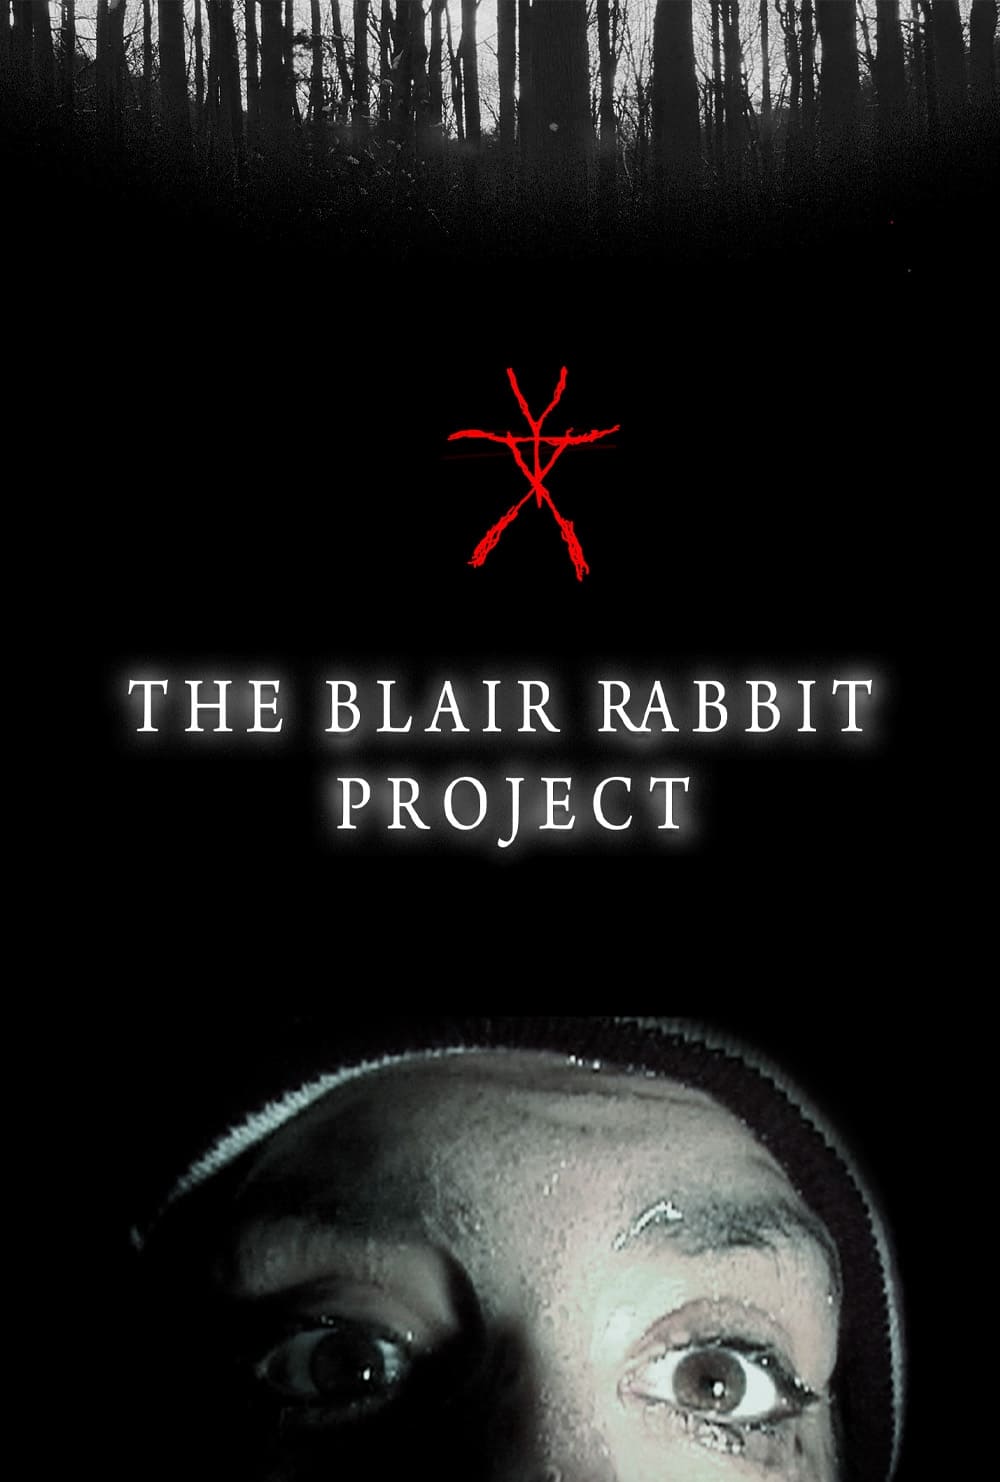 The Blare Rabbit Project